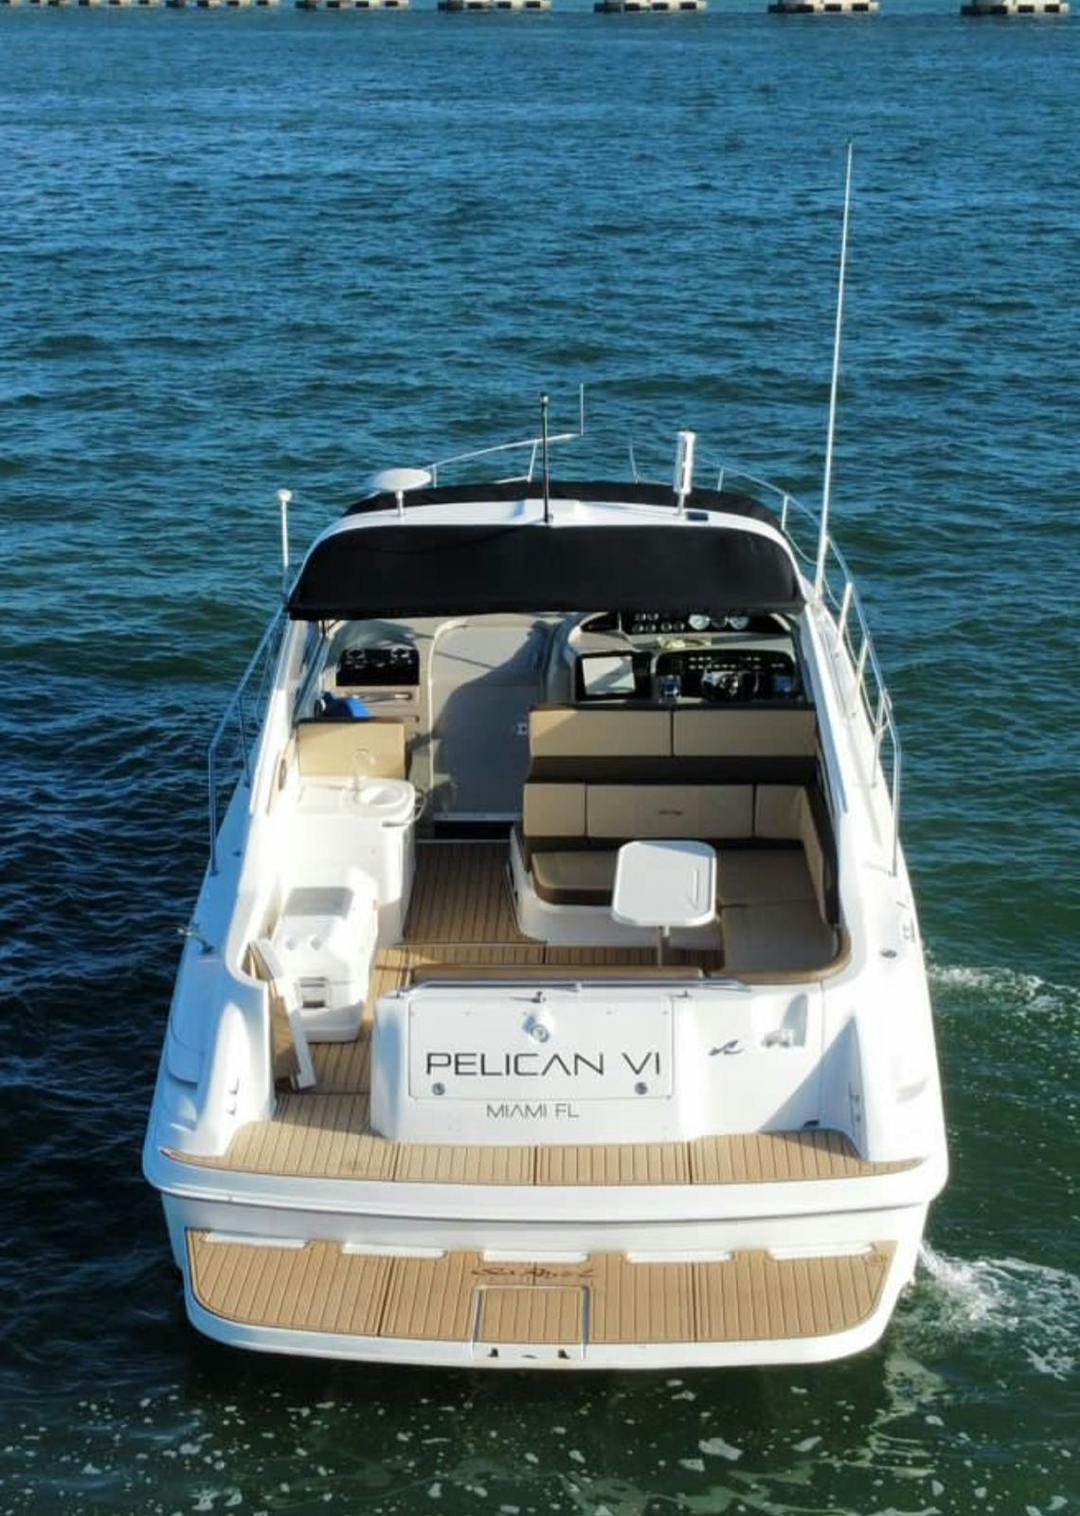 40 Pelica Vl luxury charter yacht - 3301 Rickenbacker Cswy, Miami, FL 33149, EE. UU.